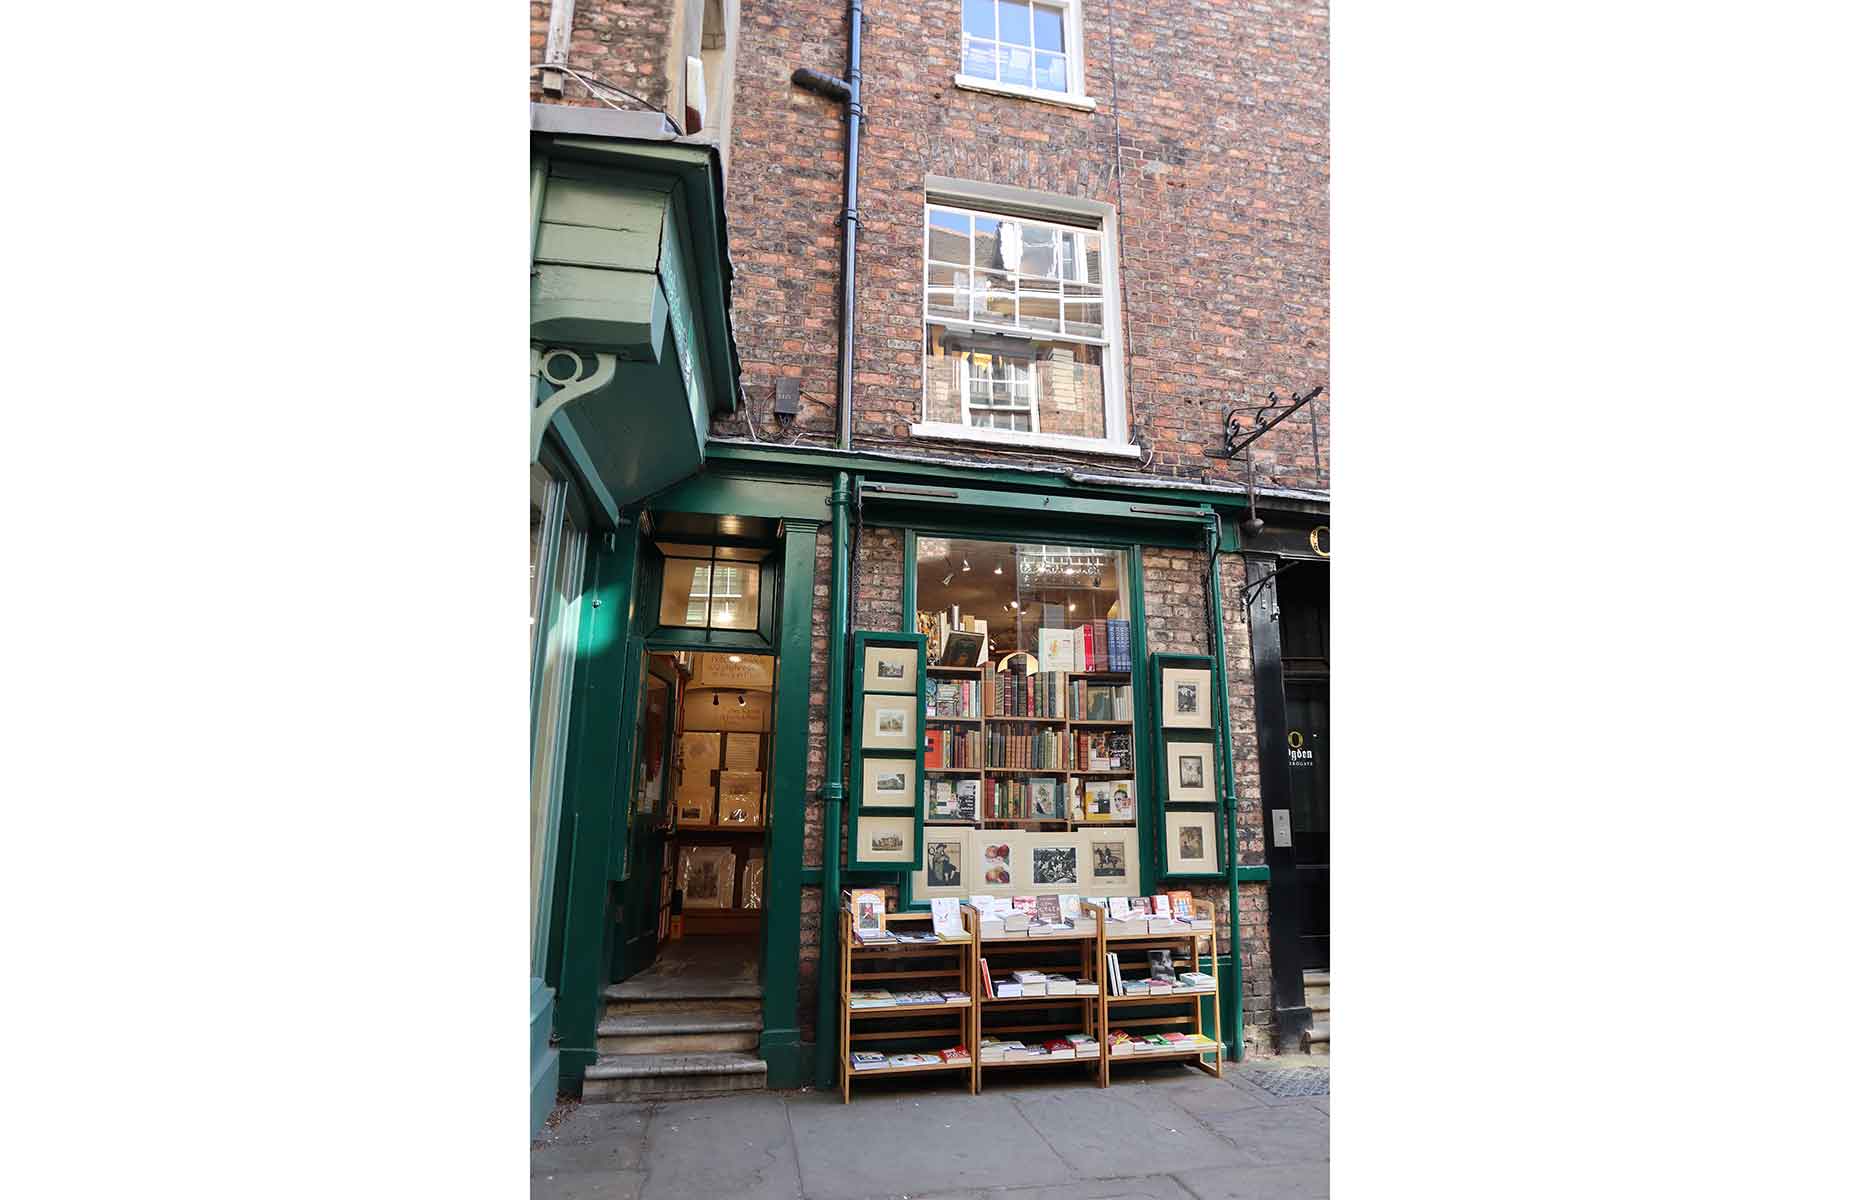 The Minster Gate Bookshop (Image: Joyce Nelson/Shutterstock